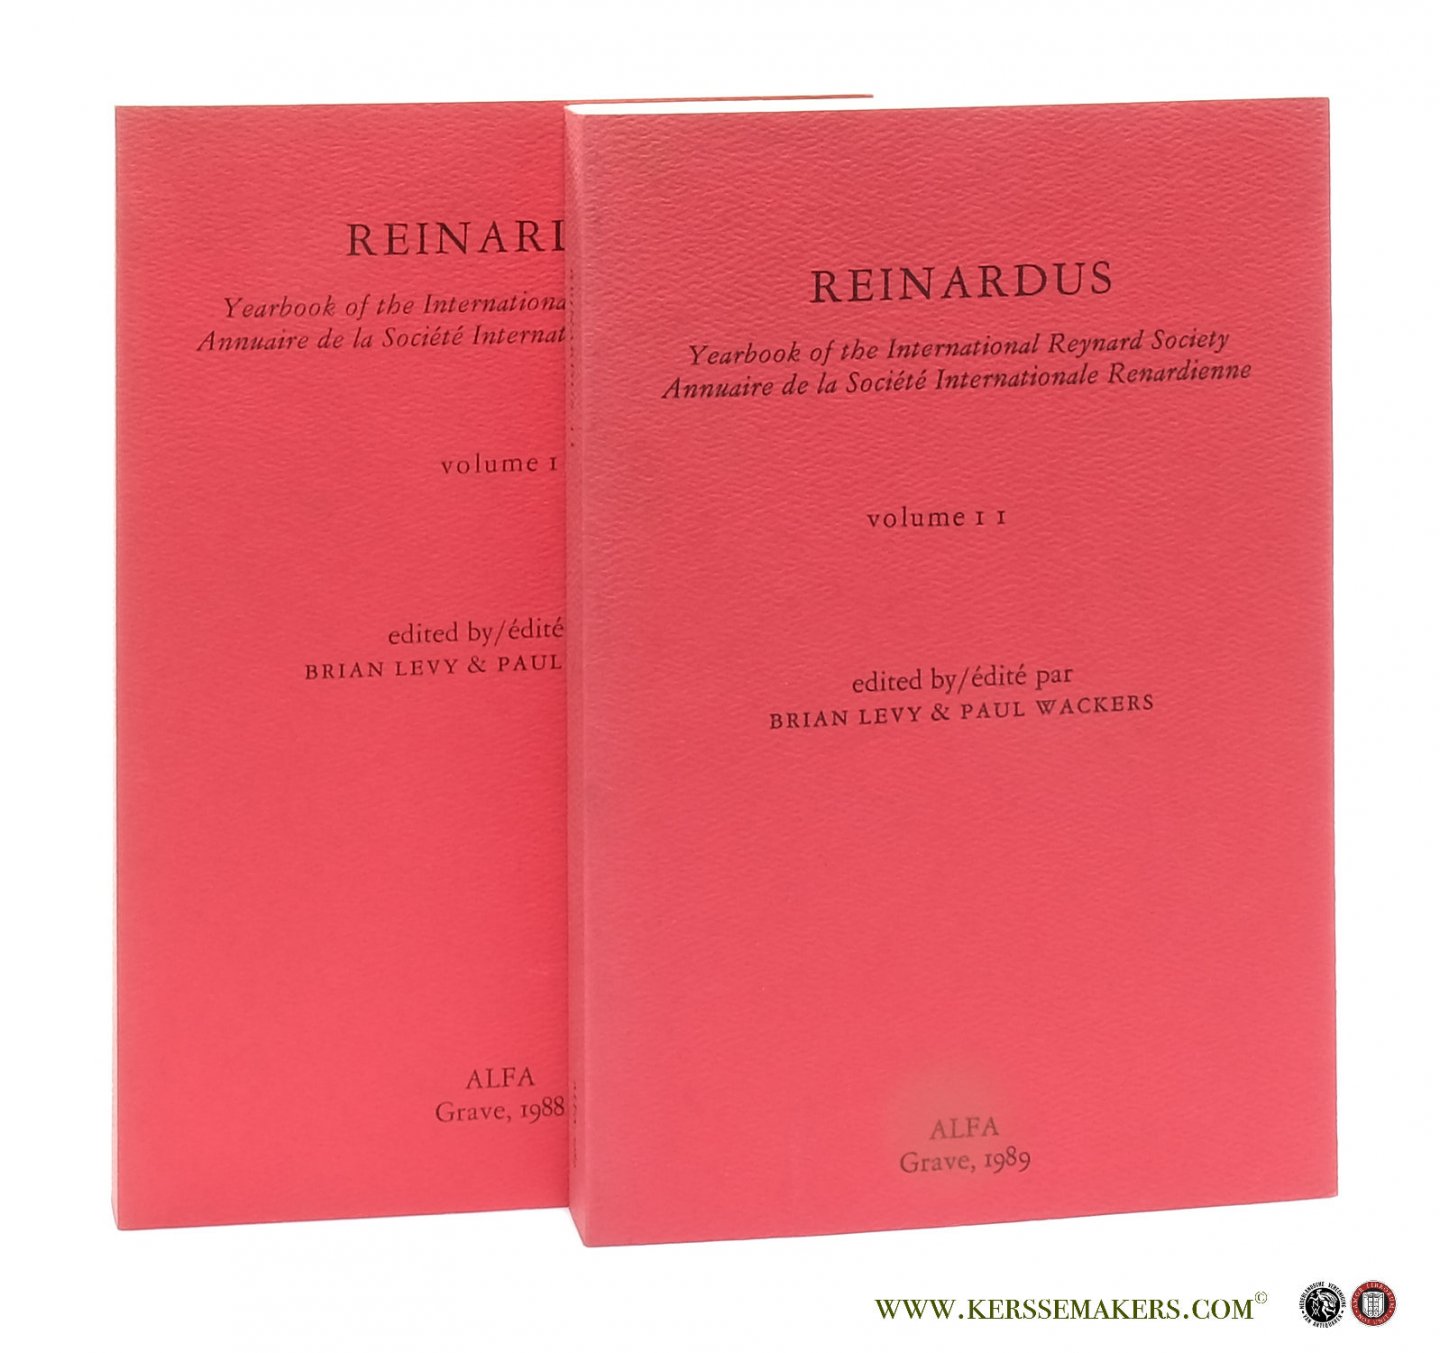 Reynard : Reinardus Ed. By B. Levy & P. Wackers. - Reinardus. Yearbook of the International Reynard Society. Annuaire de la Société Internationale Renardienne. Volume 1 & 2.